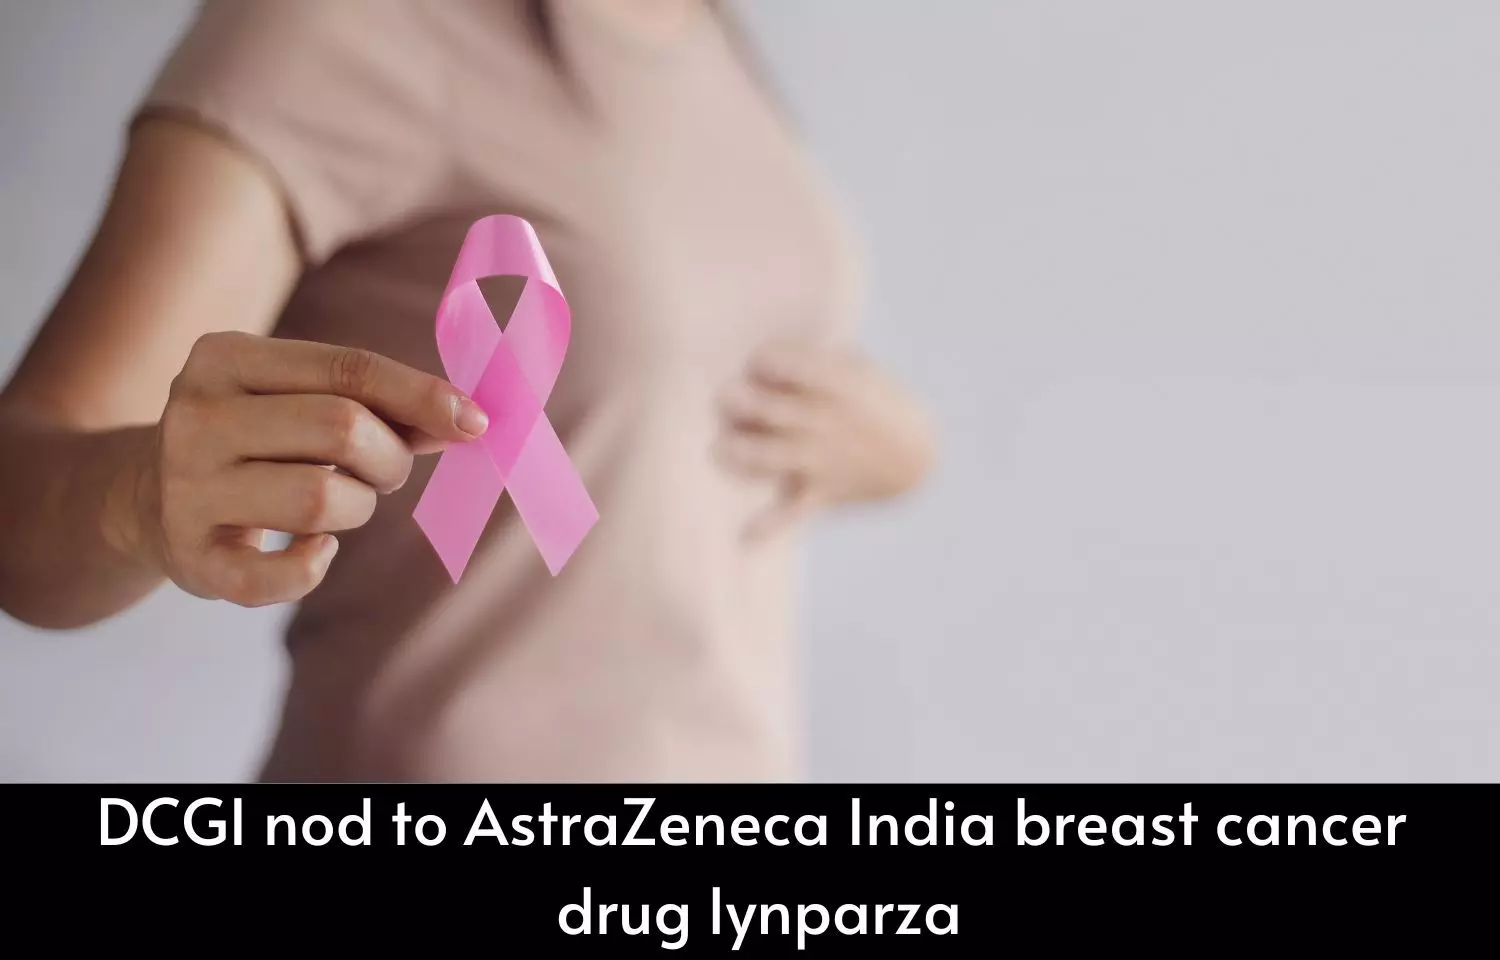 AstraZeneca India breast cancer drug lynparza gets DCGI okay